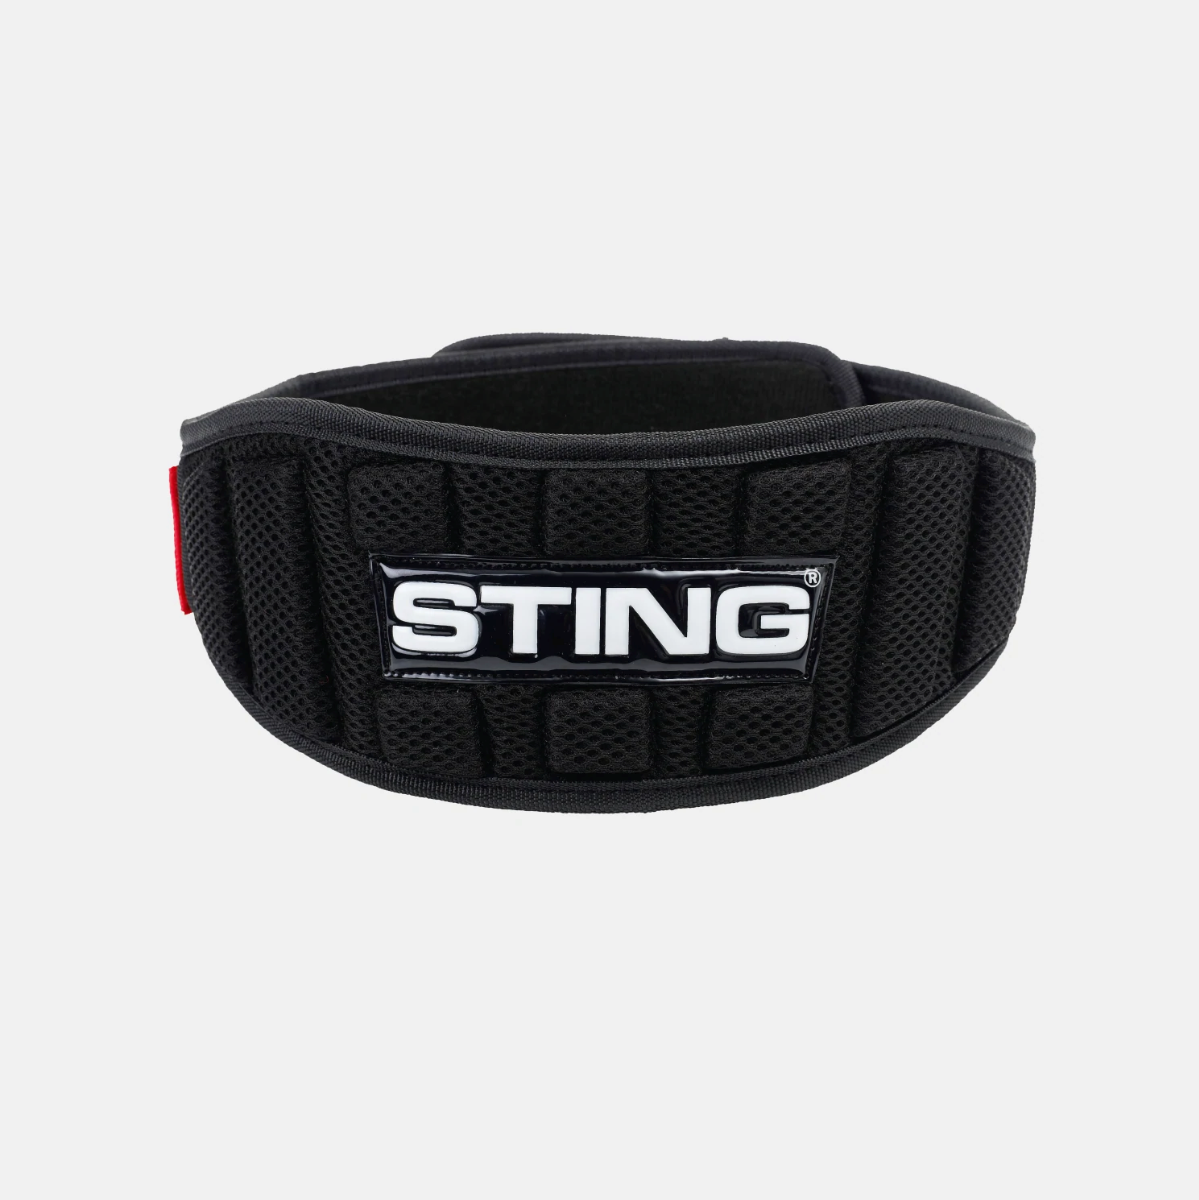 Sting Neoprene Lifting Belt 4" - Black/Red